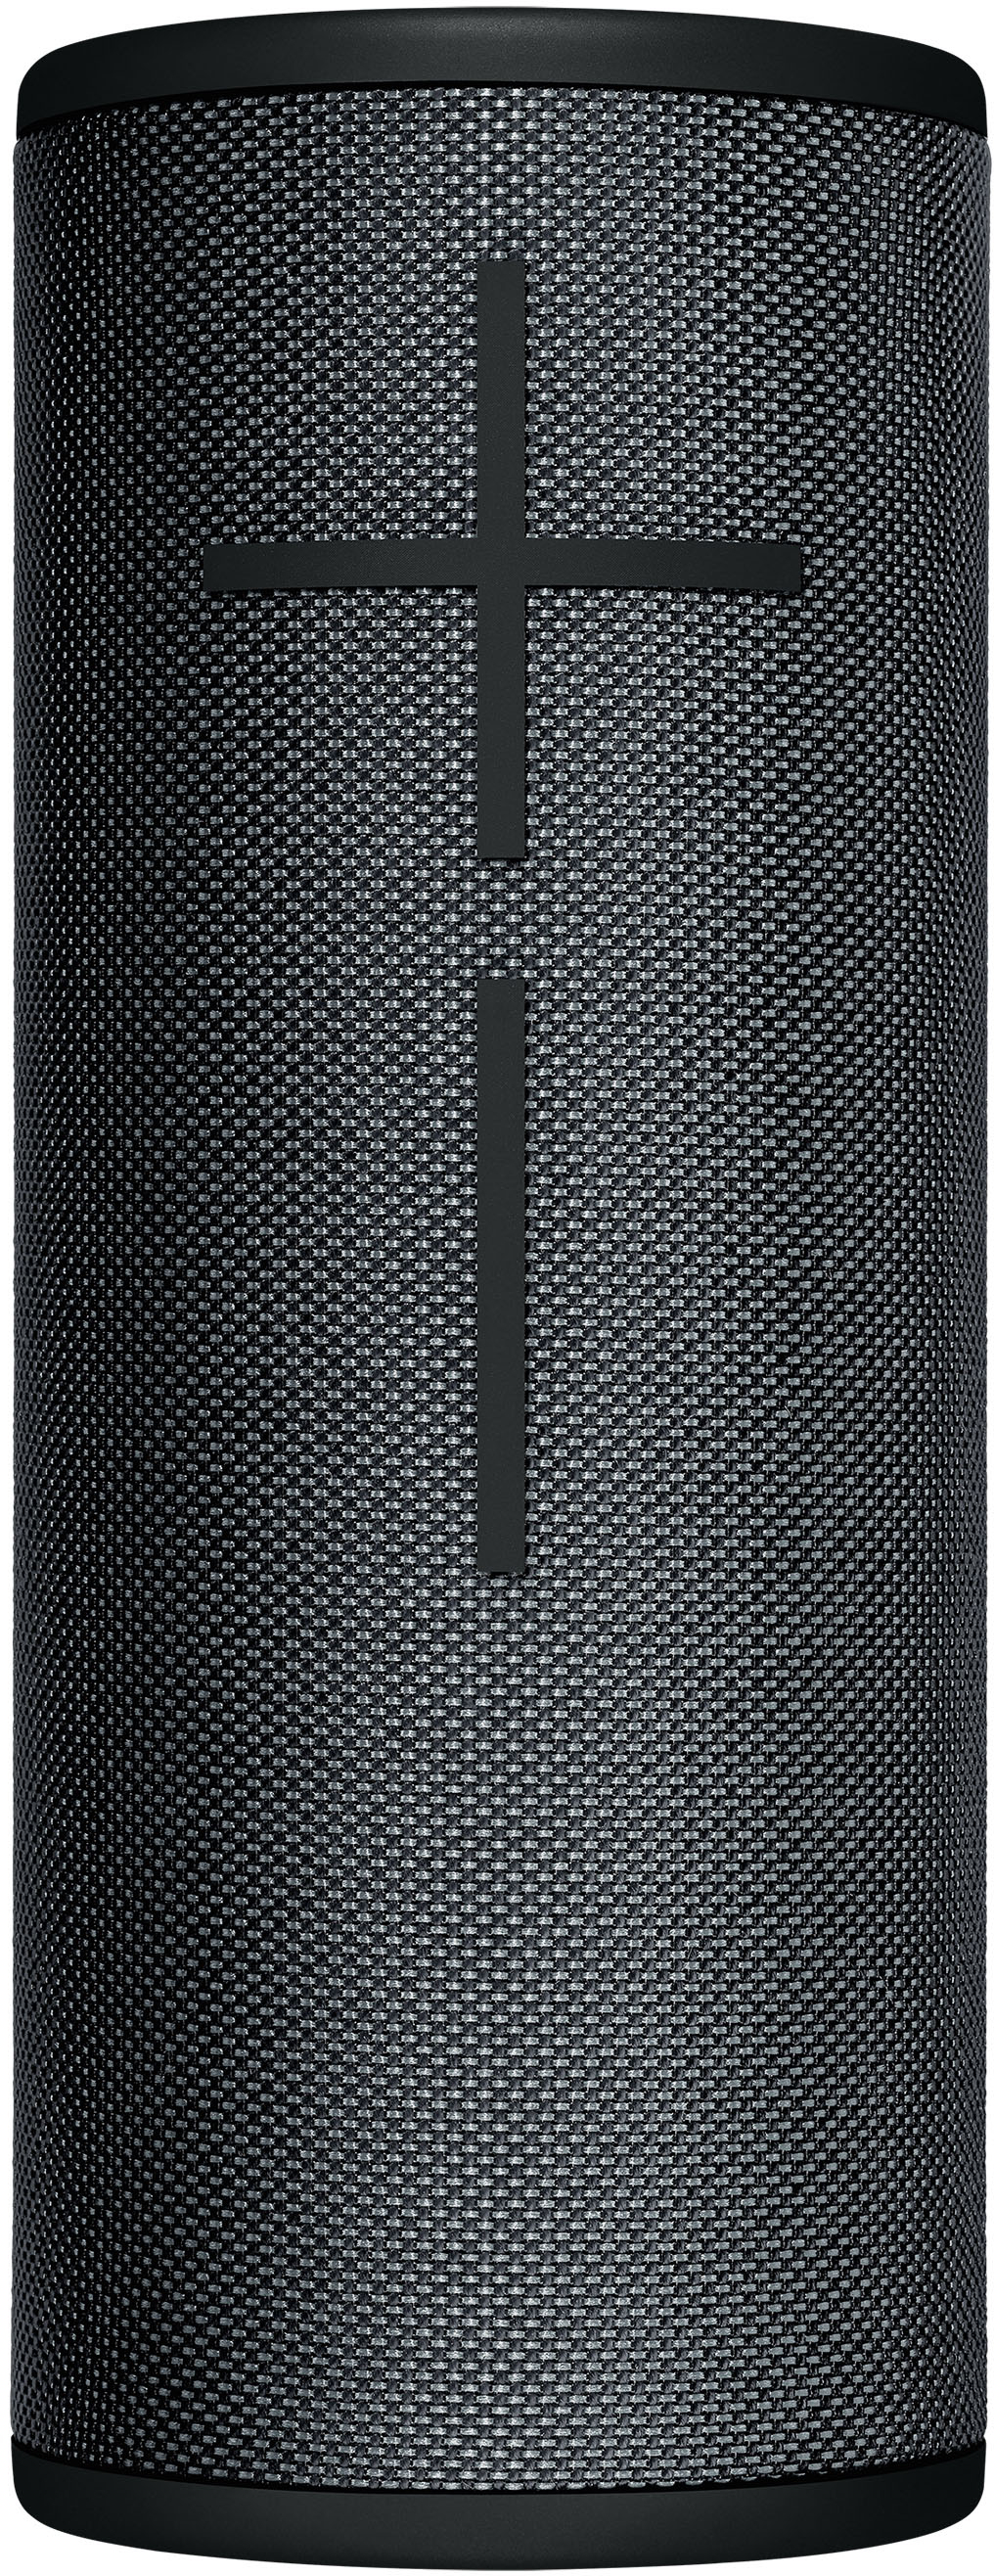 Stille og rolig performer rådgive Ultimate Ears BOOM 3 Portable Wireless Bluetooth Speaker with  Waterproof/Dustproof Design Night Black 984-001348 - Best Buy